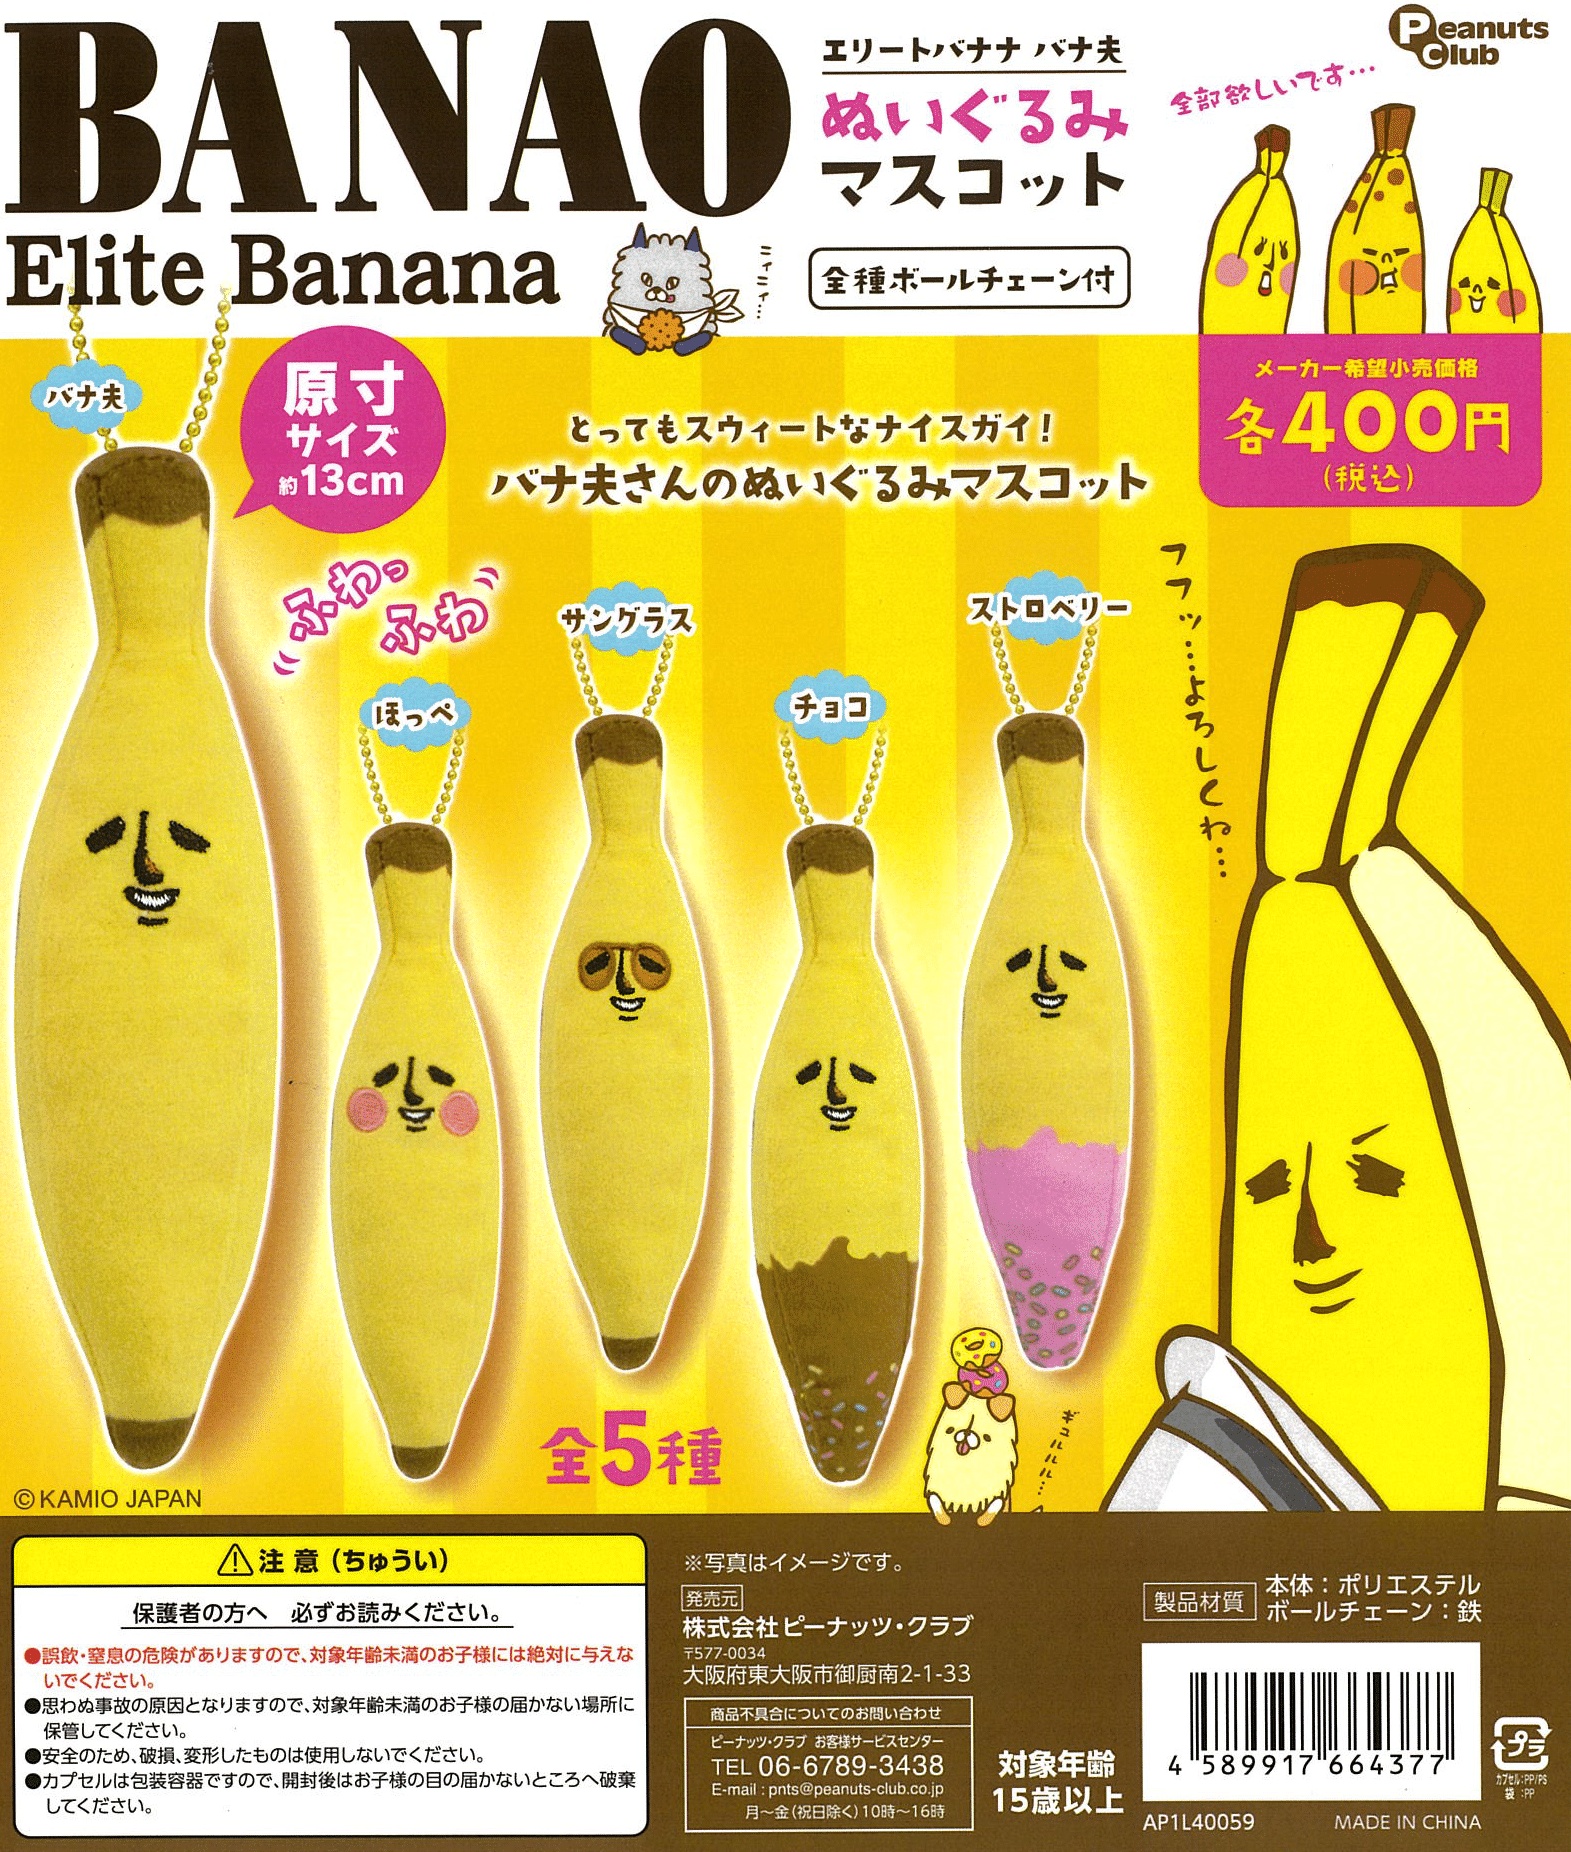 CP2655 Elite Banana Banao Plush Mascot